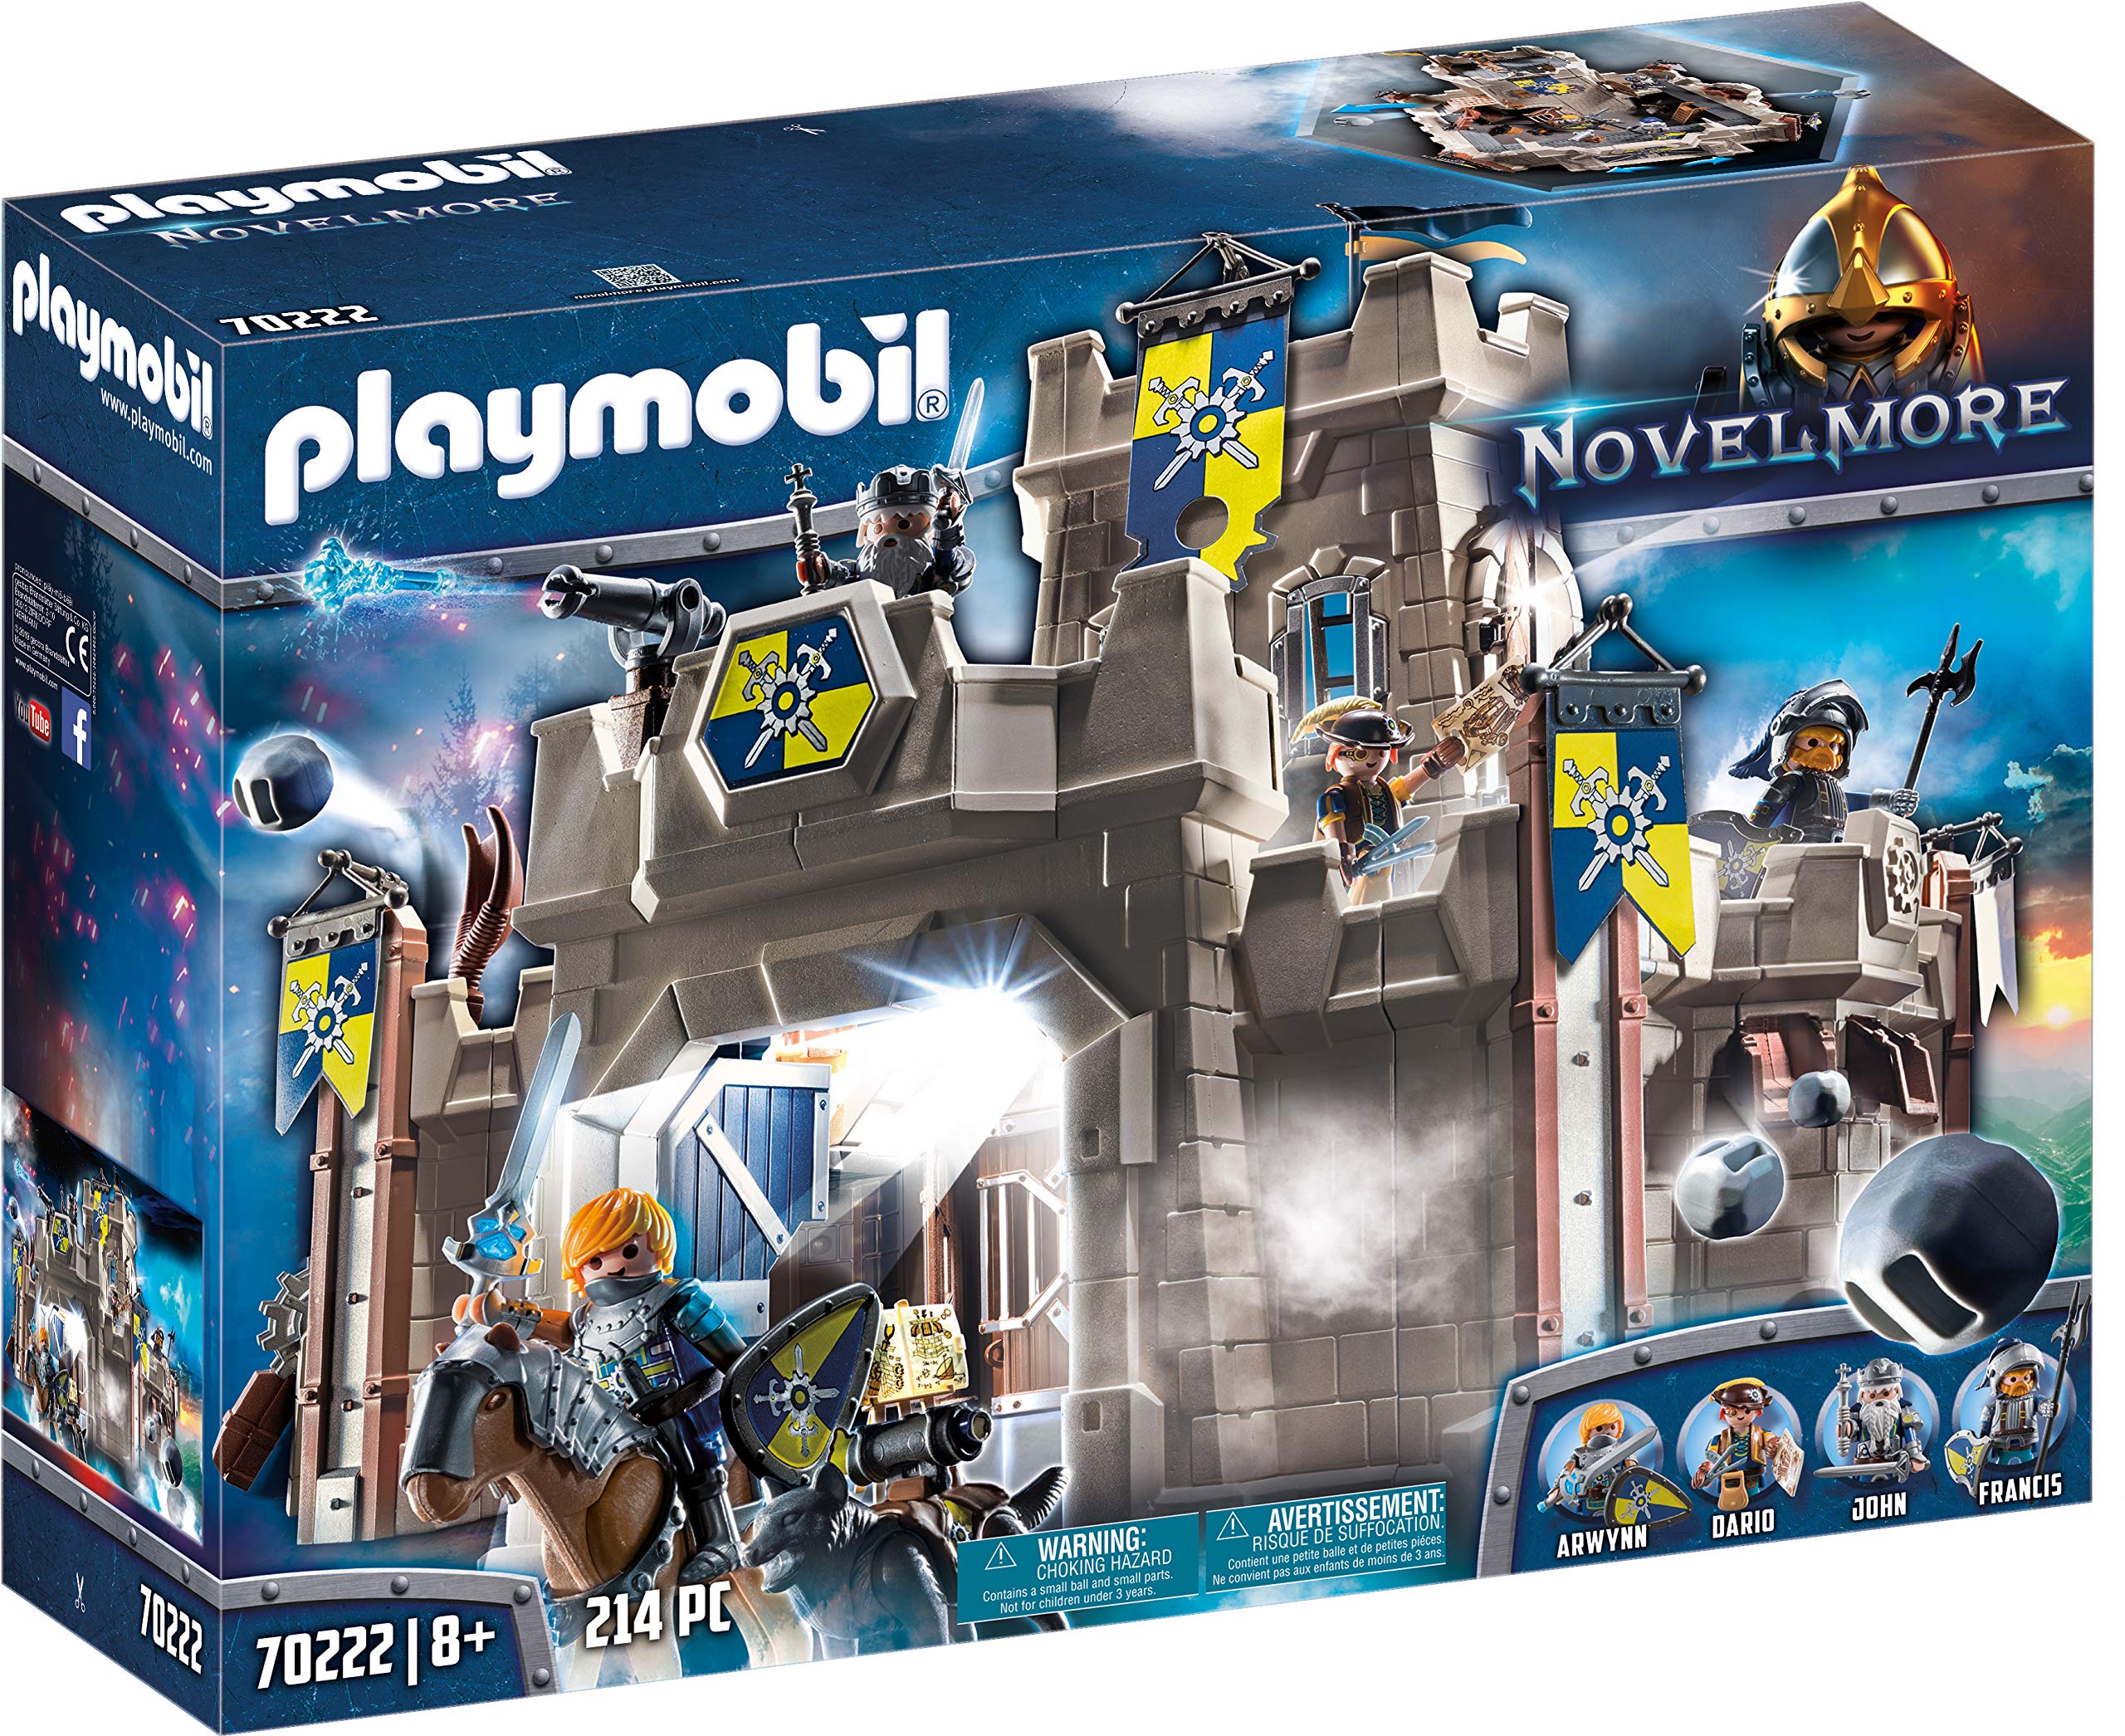 Køb Playmobil Novelmore Slot (70222) - Fri fragt